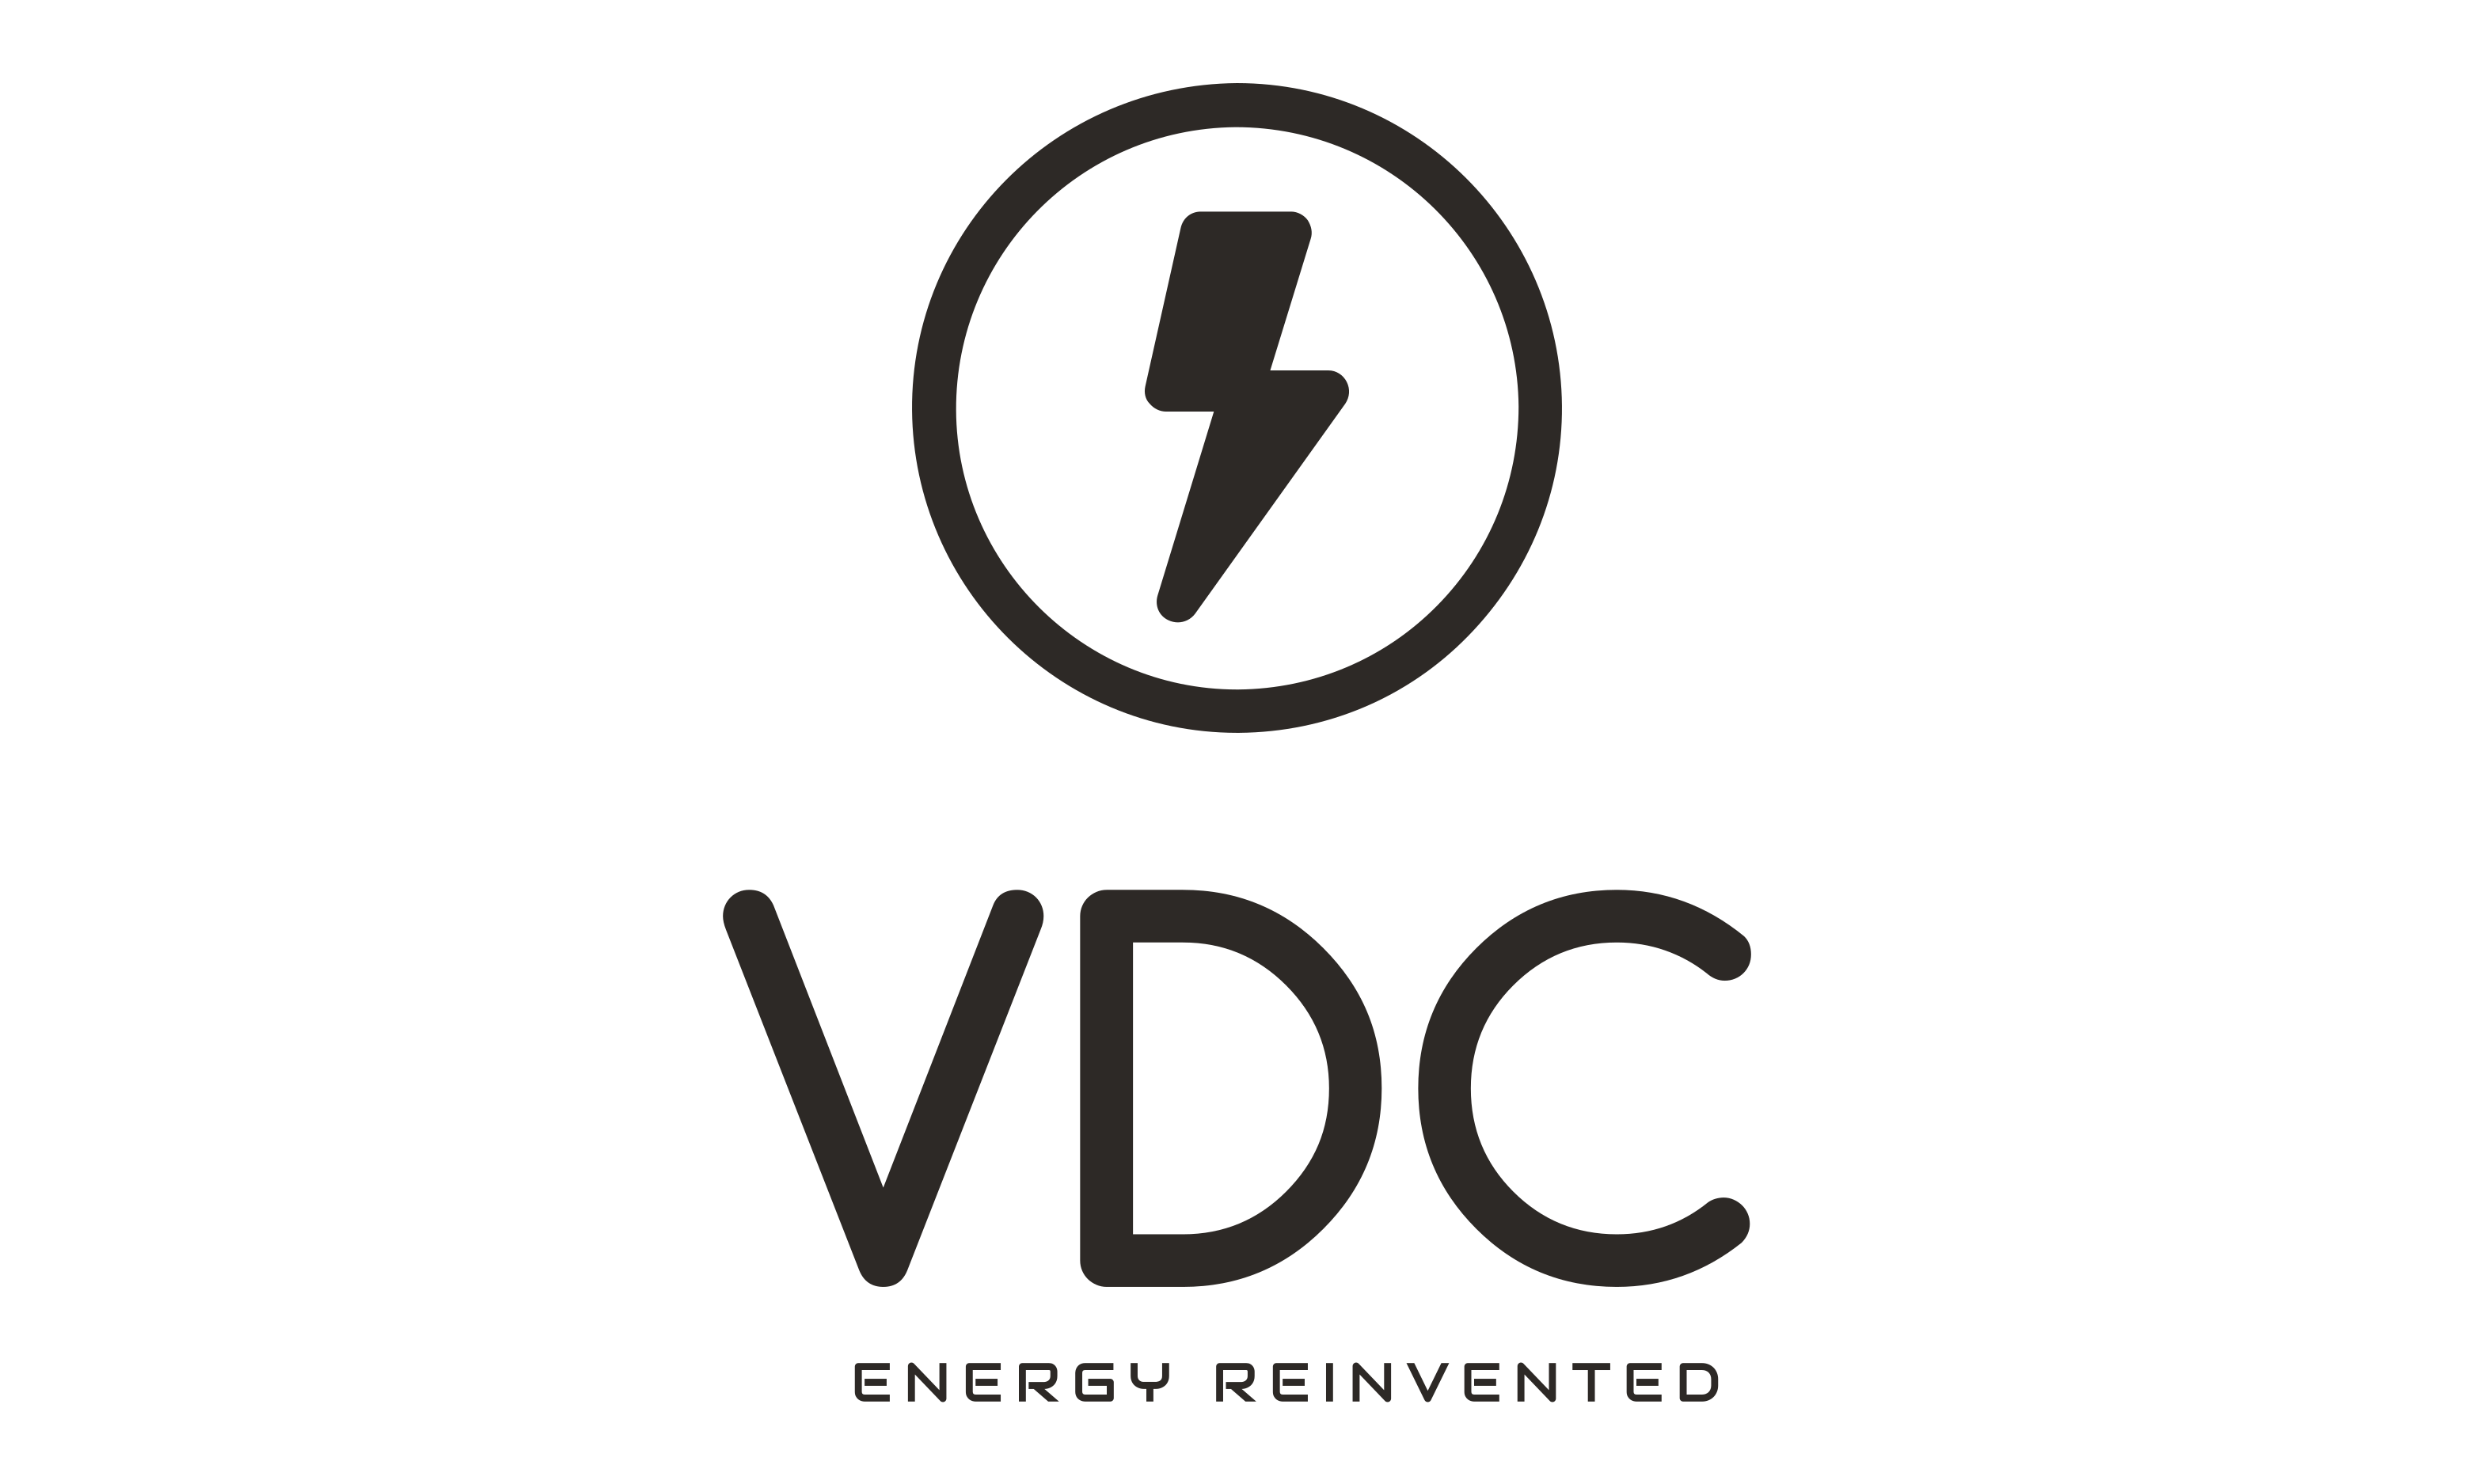 VDC - Uninterrupted power everywhere